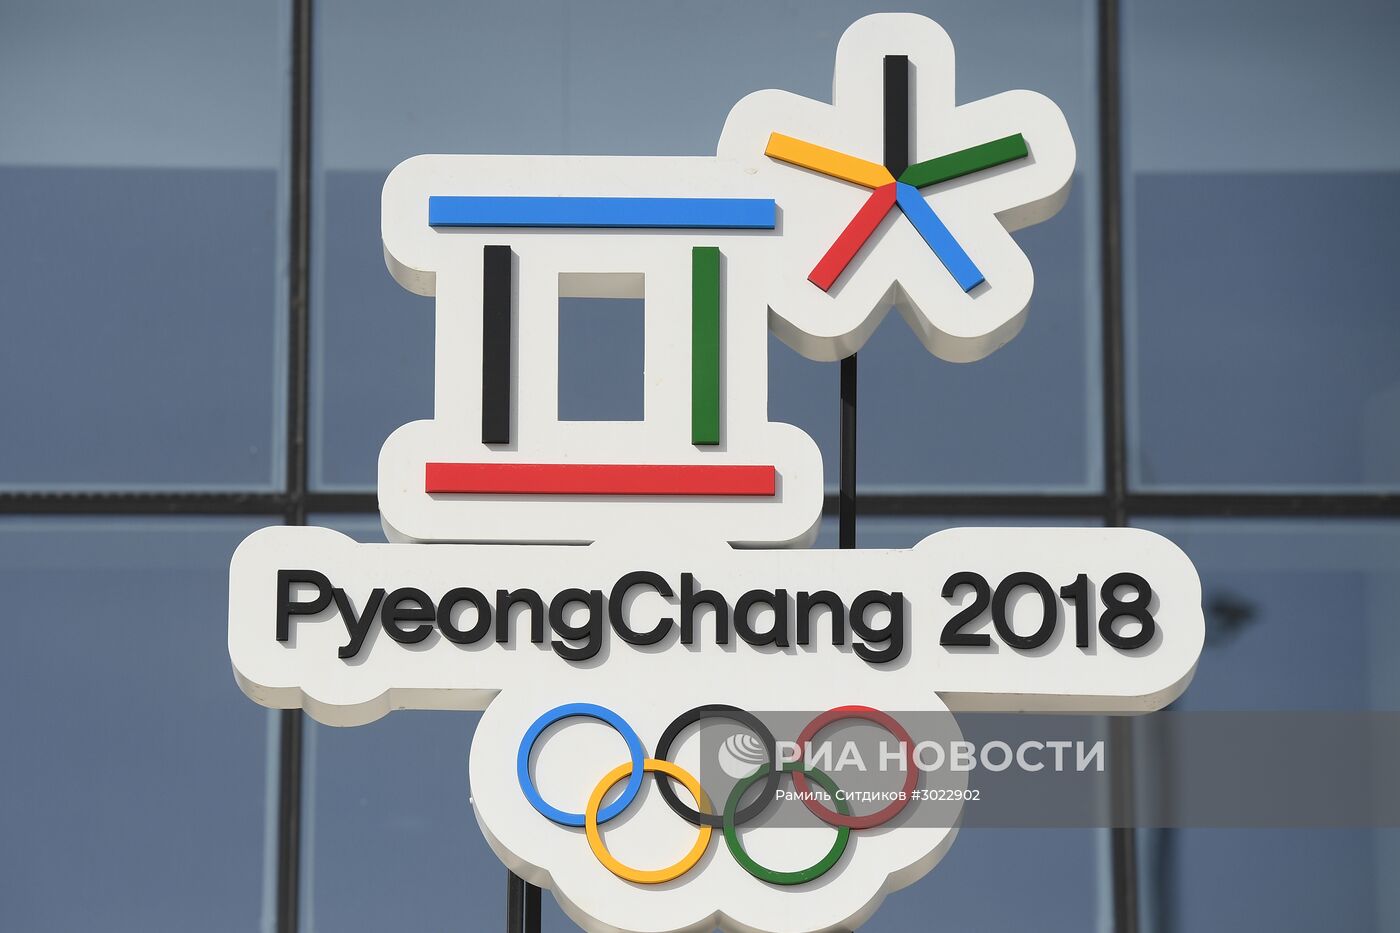 Олимпийский парк в Пхенчхане